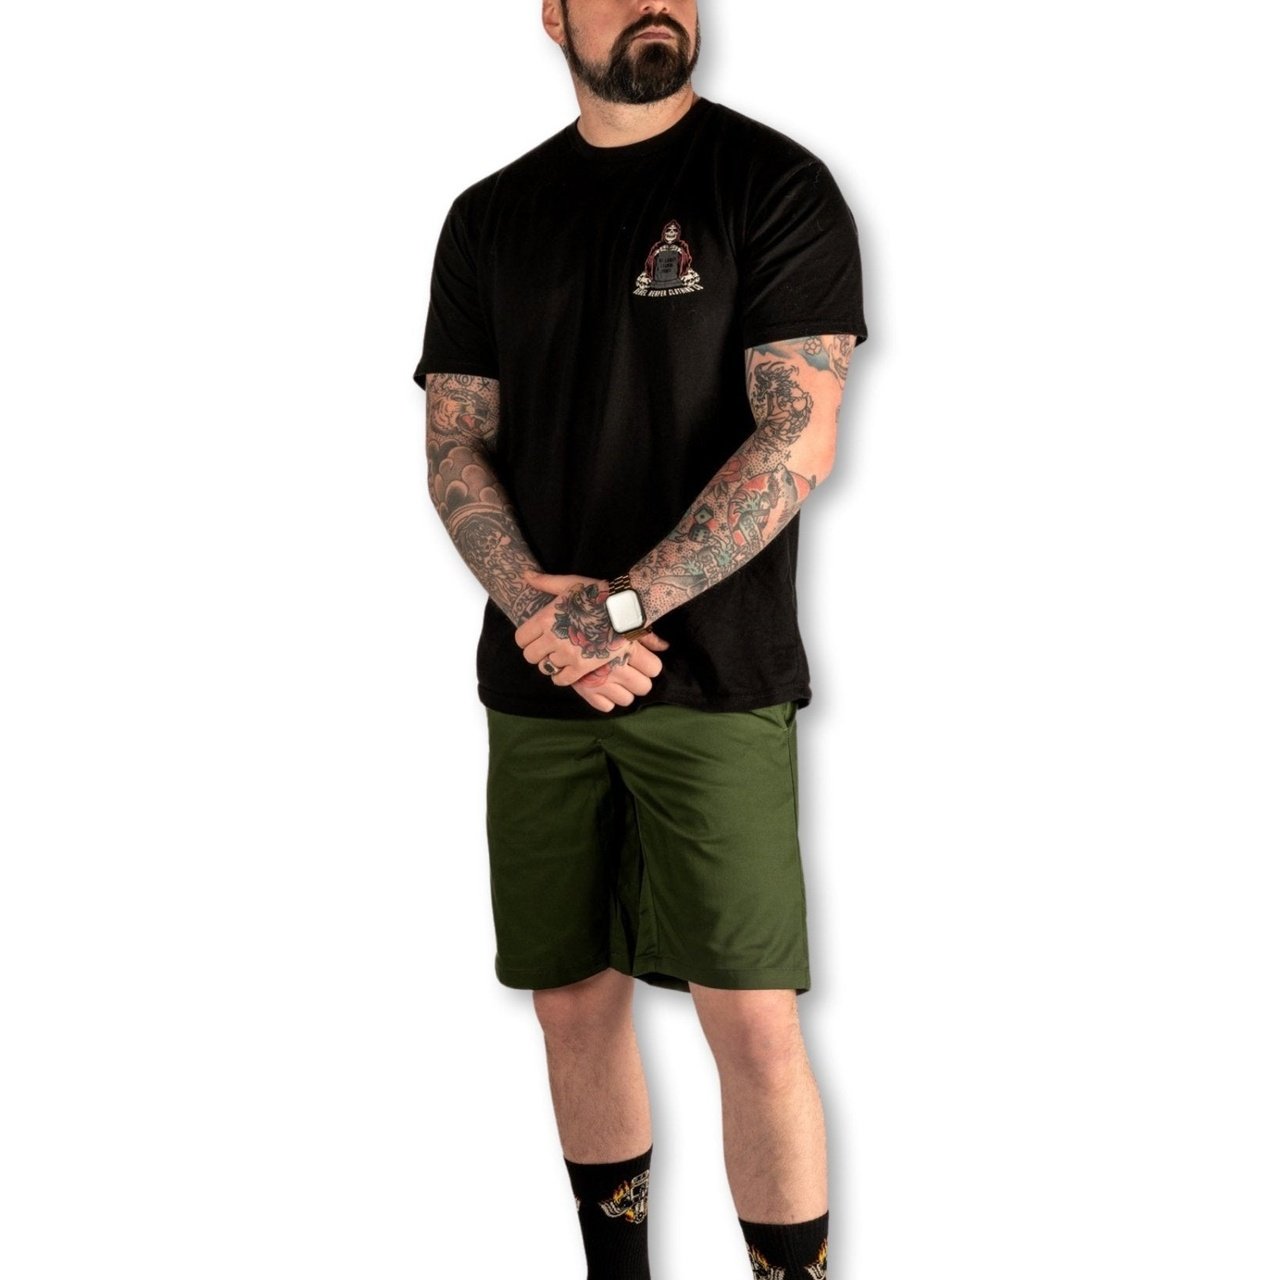 Mens Green Chino Shorts - Rebel Reaper Clothing CompanyChino Shorts